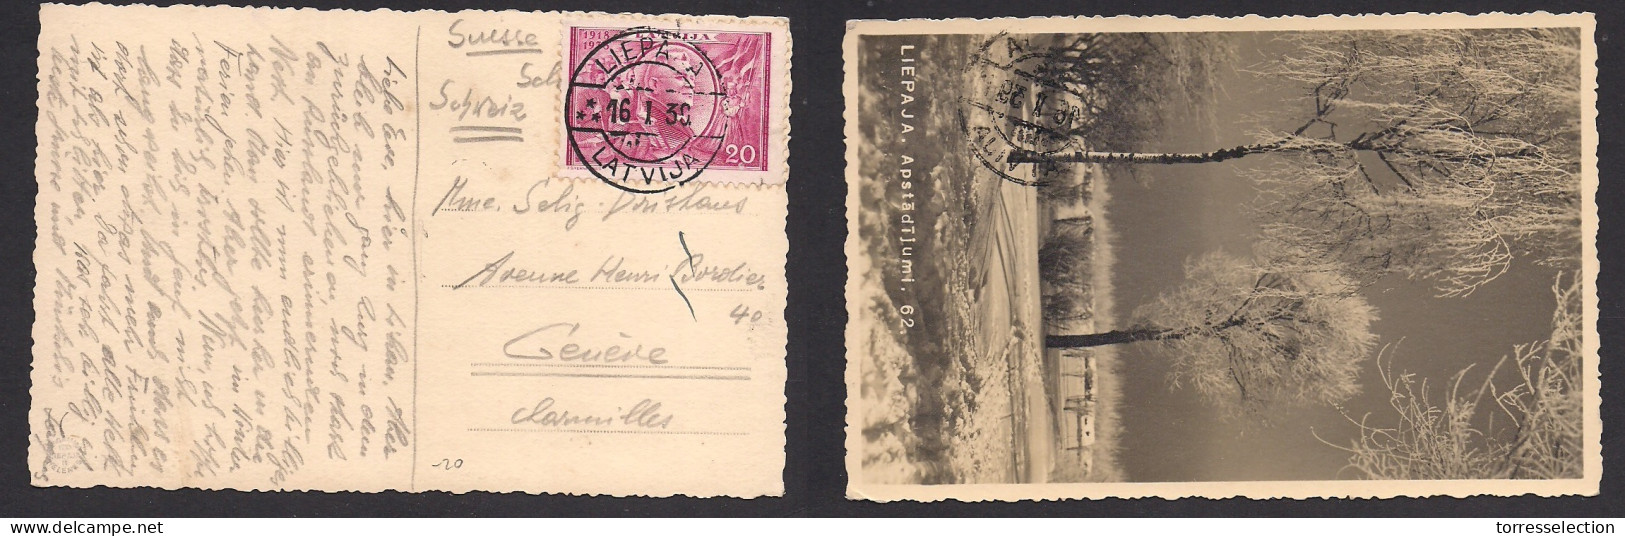 LATVIA. 1939 (16 Jan) Liepaja - Switzerland, Geneve. Single 20c Violet Fkd Ppc. Fine. - Letonia